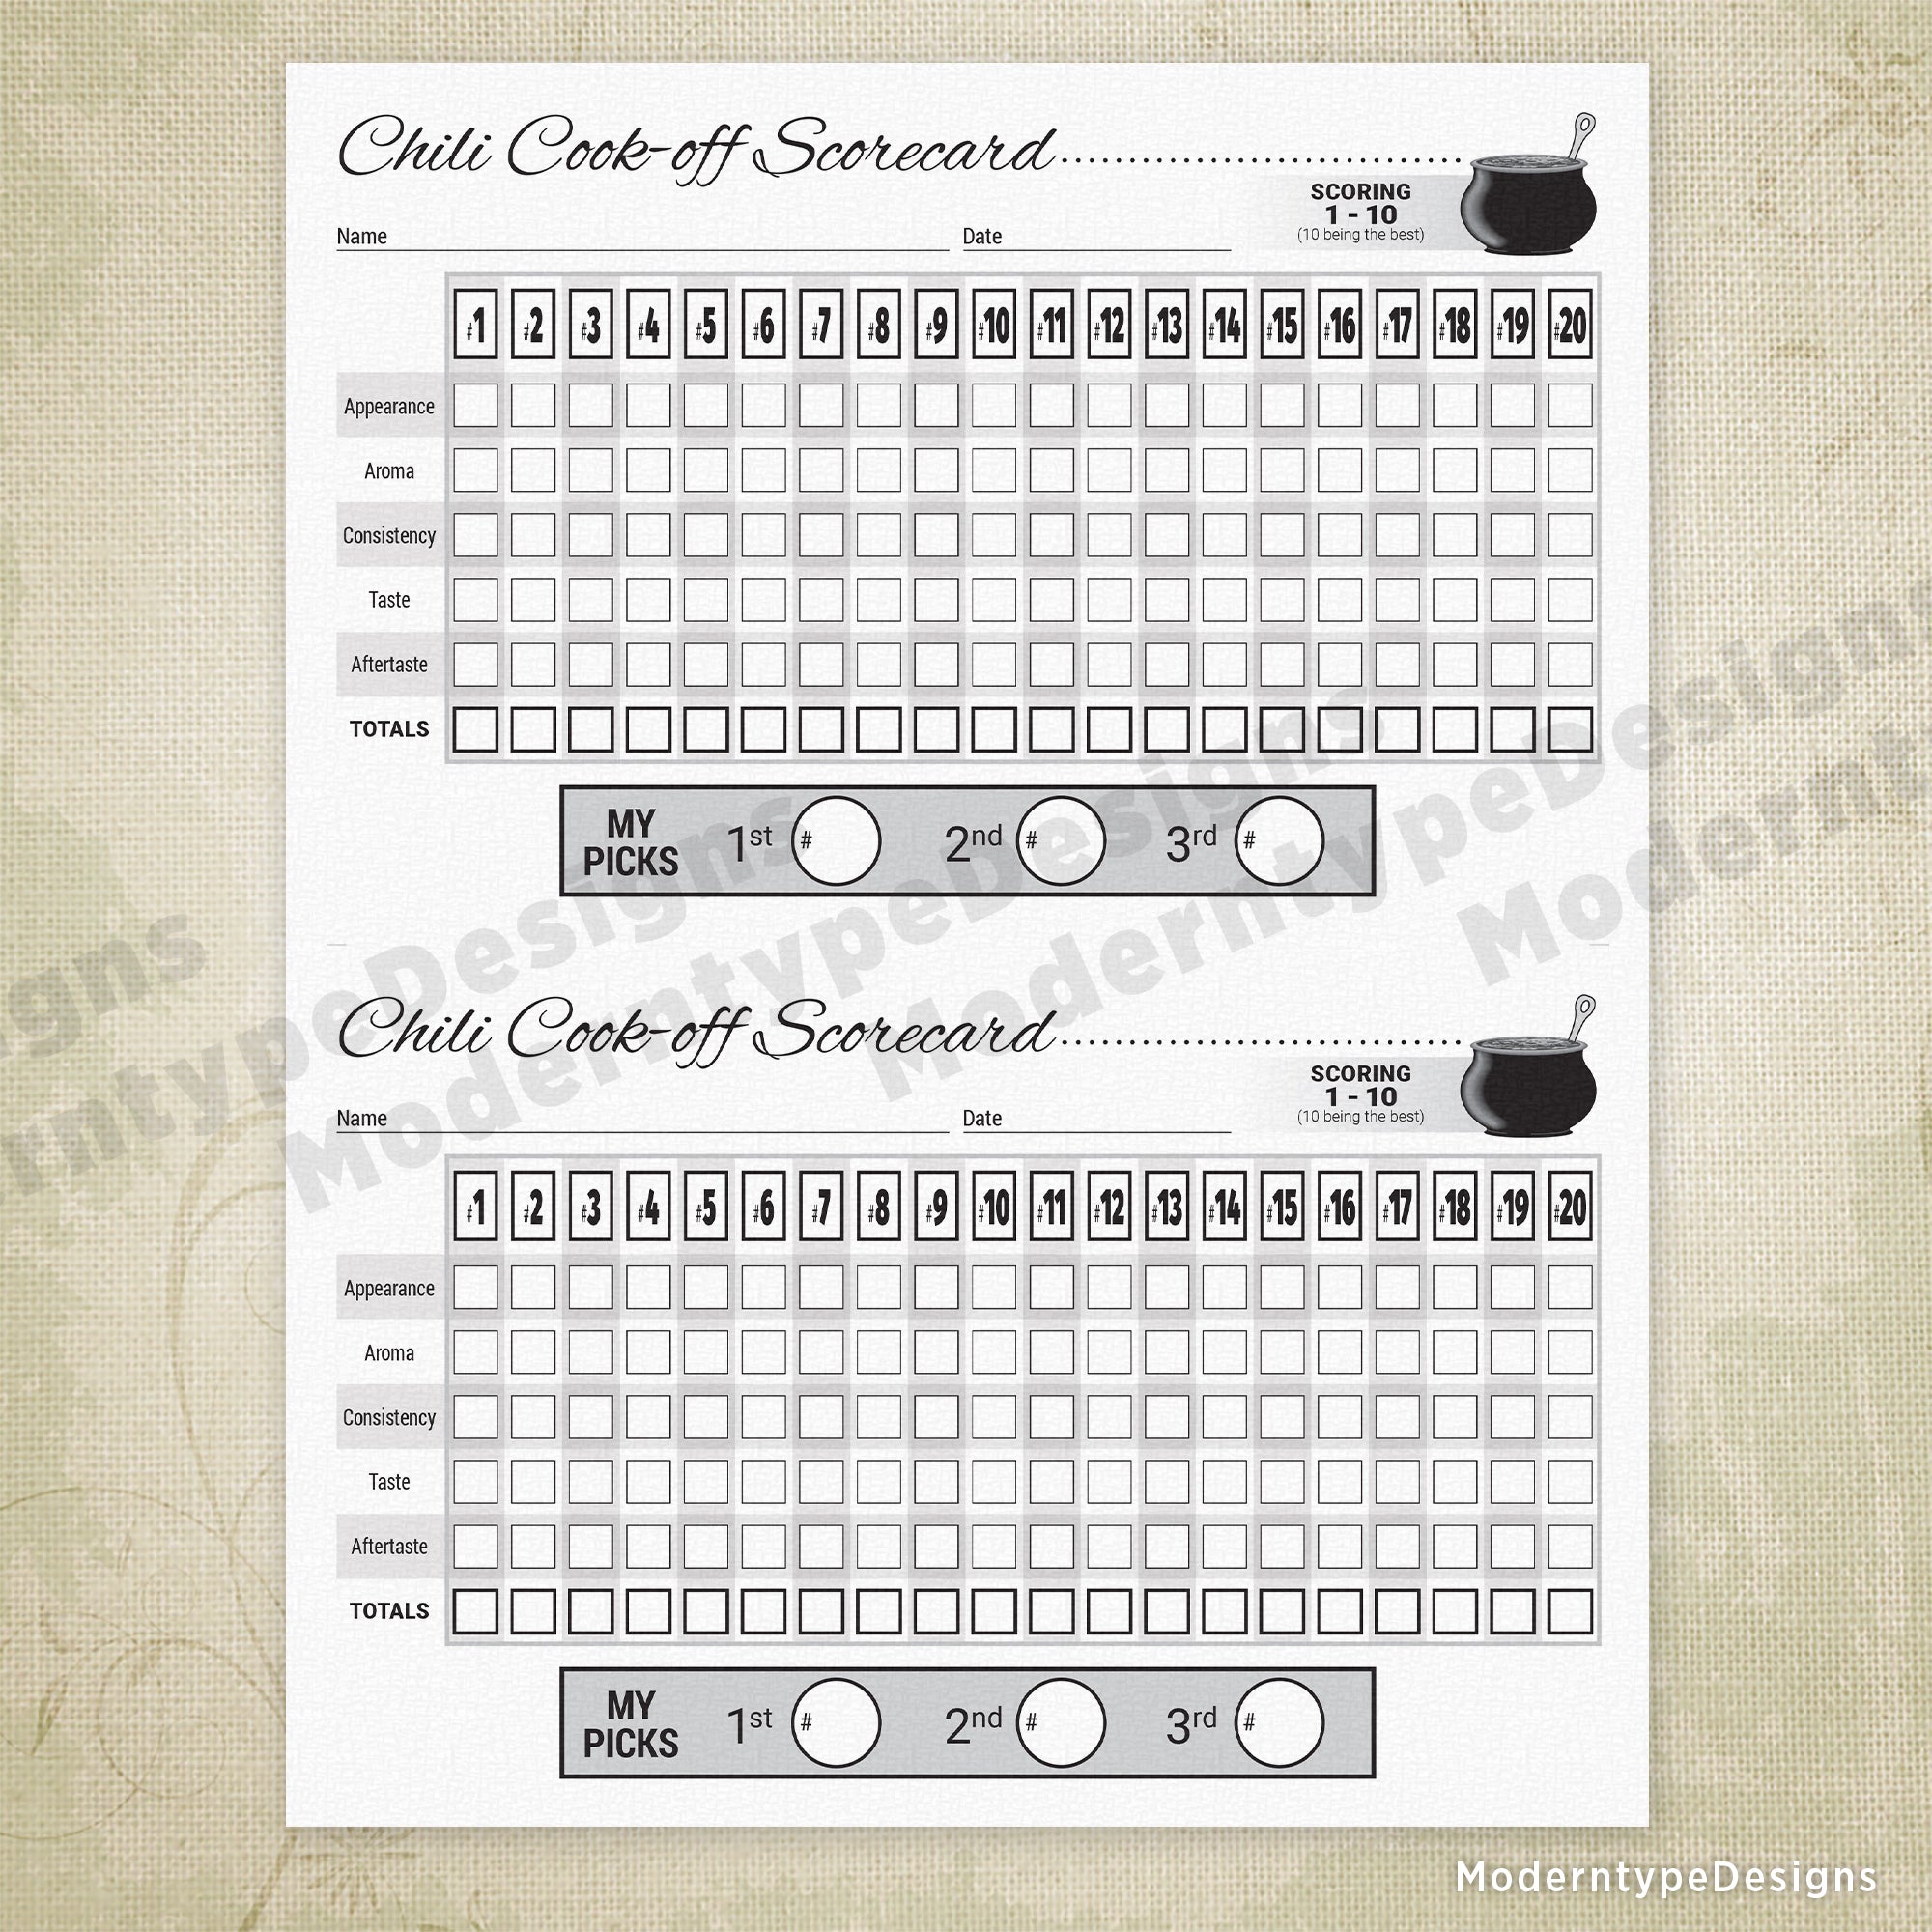 Chili Cook-off Advanced Scorecard Printable, 20 Entries, 8.5 x 5.5"